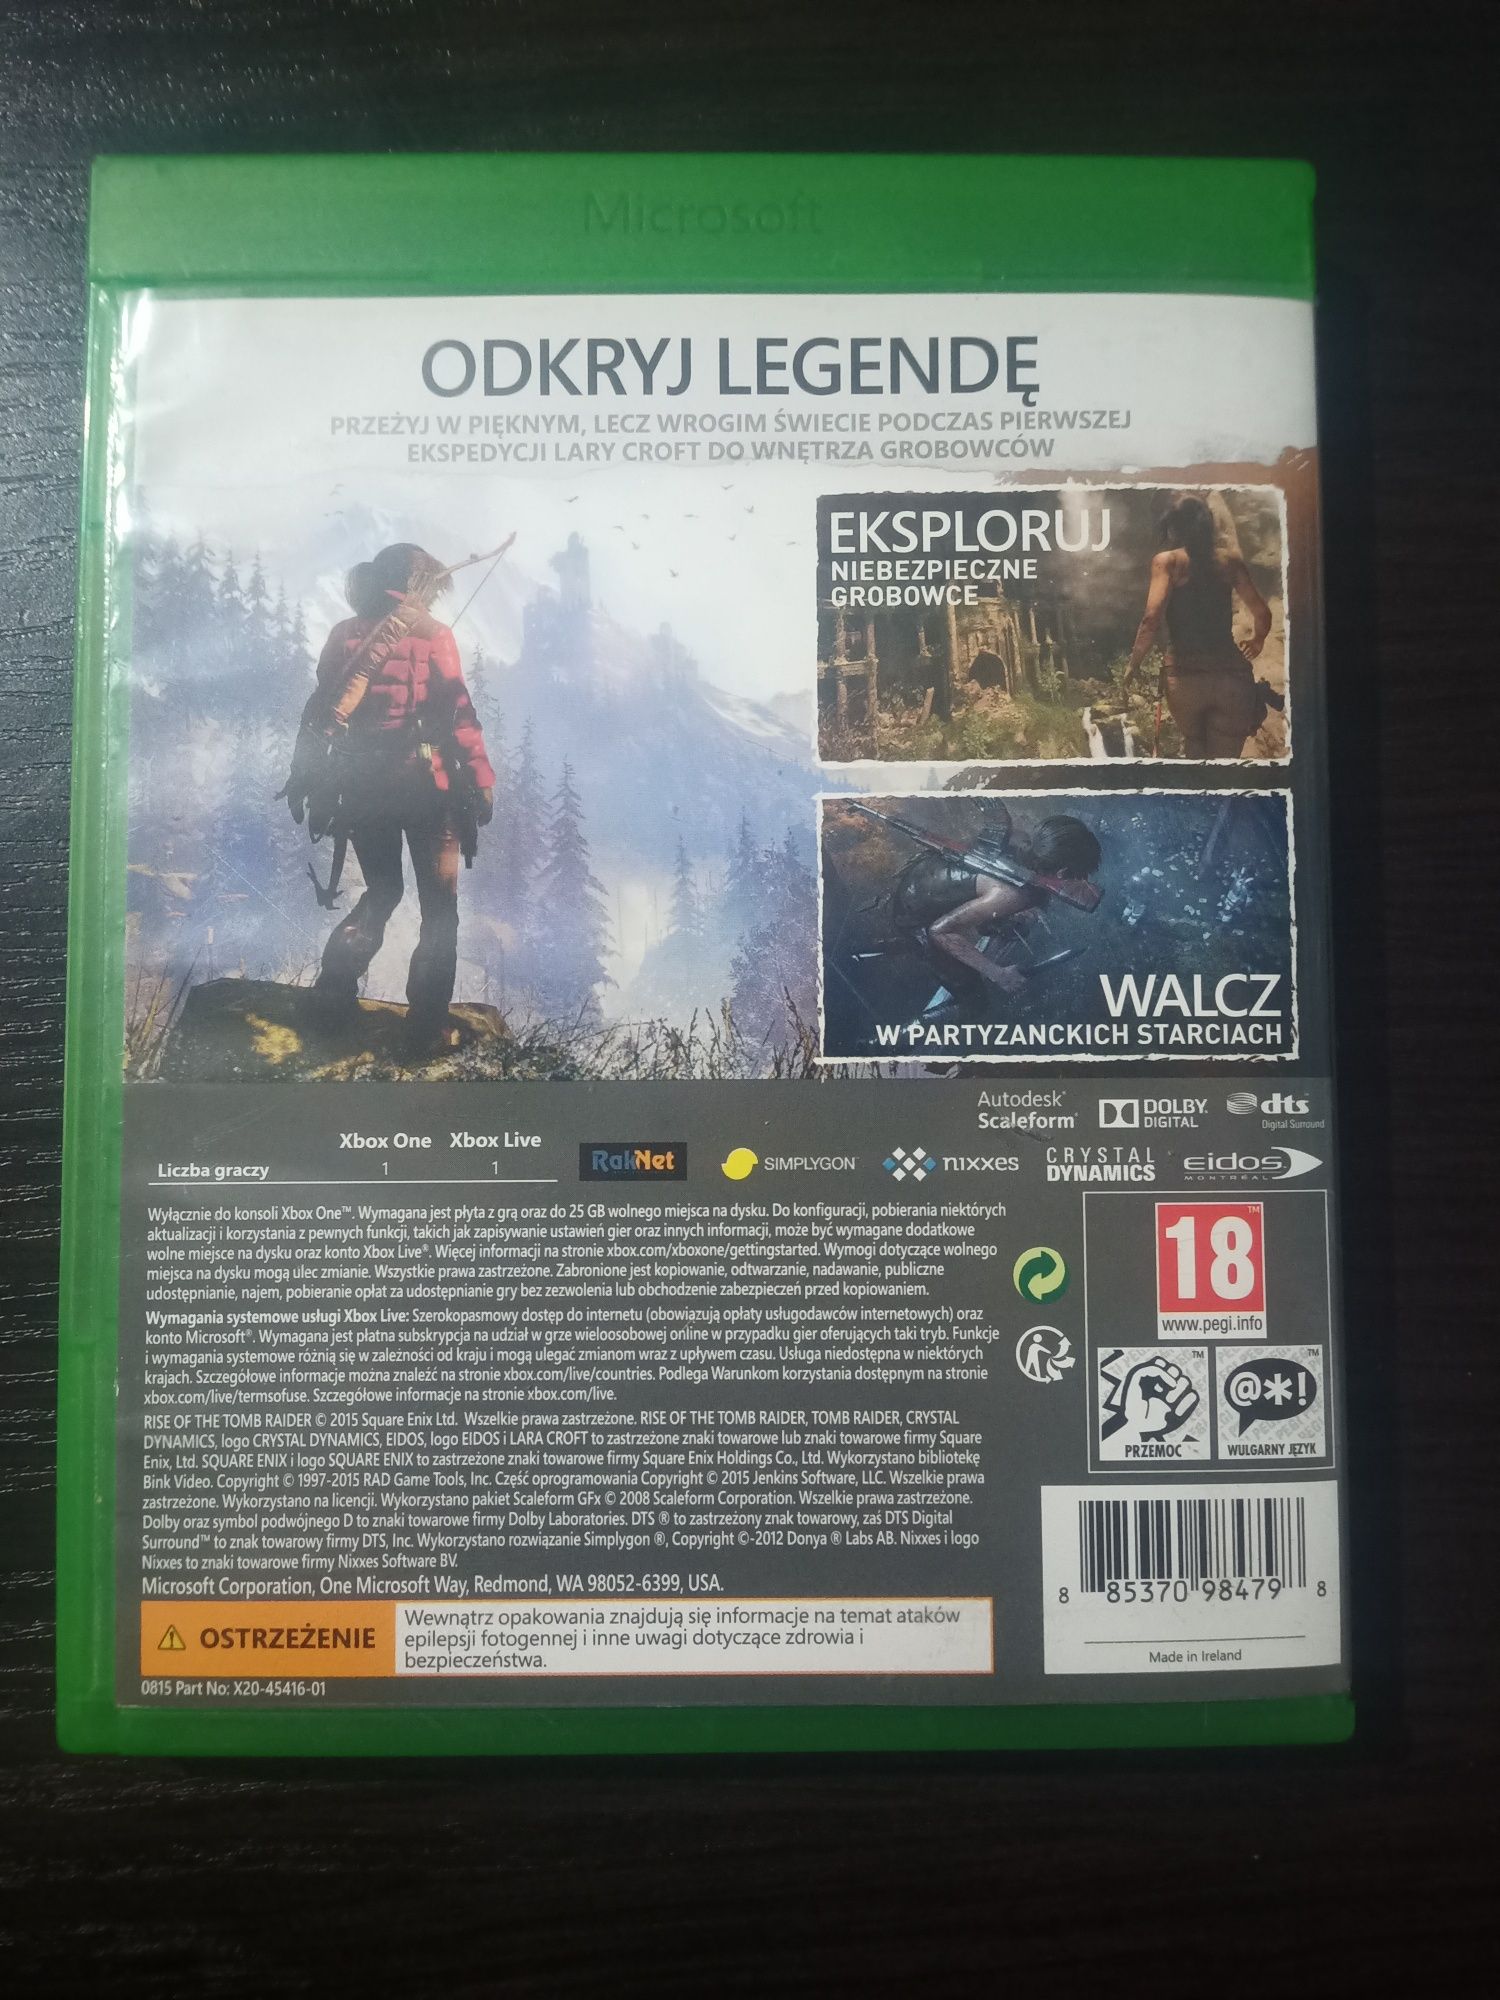 Gra Tomb Raider Xbox one